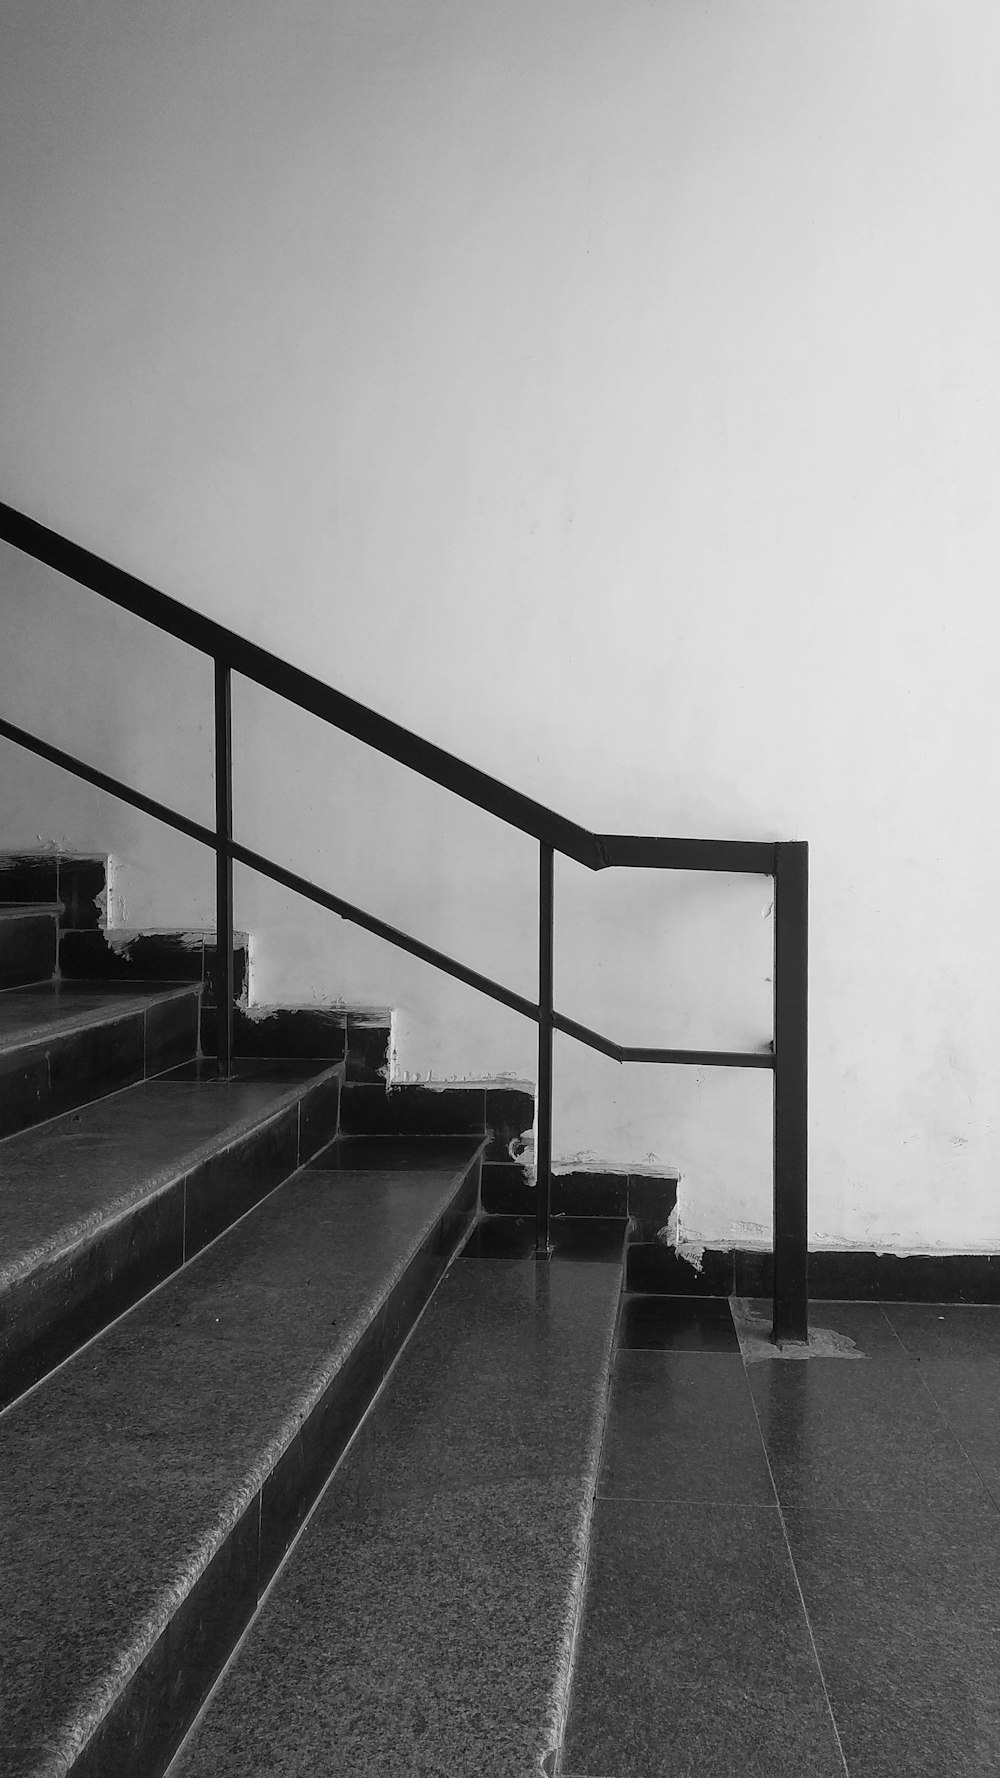 escada preta na fotografia em tons de cinza